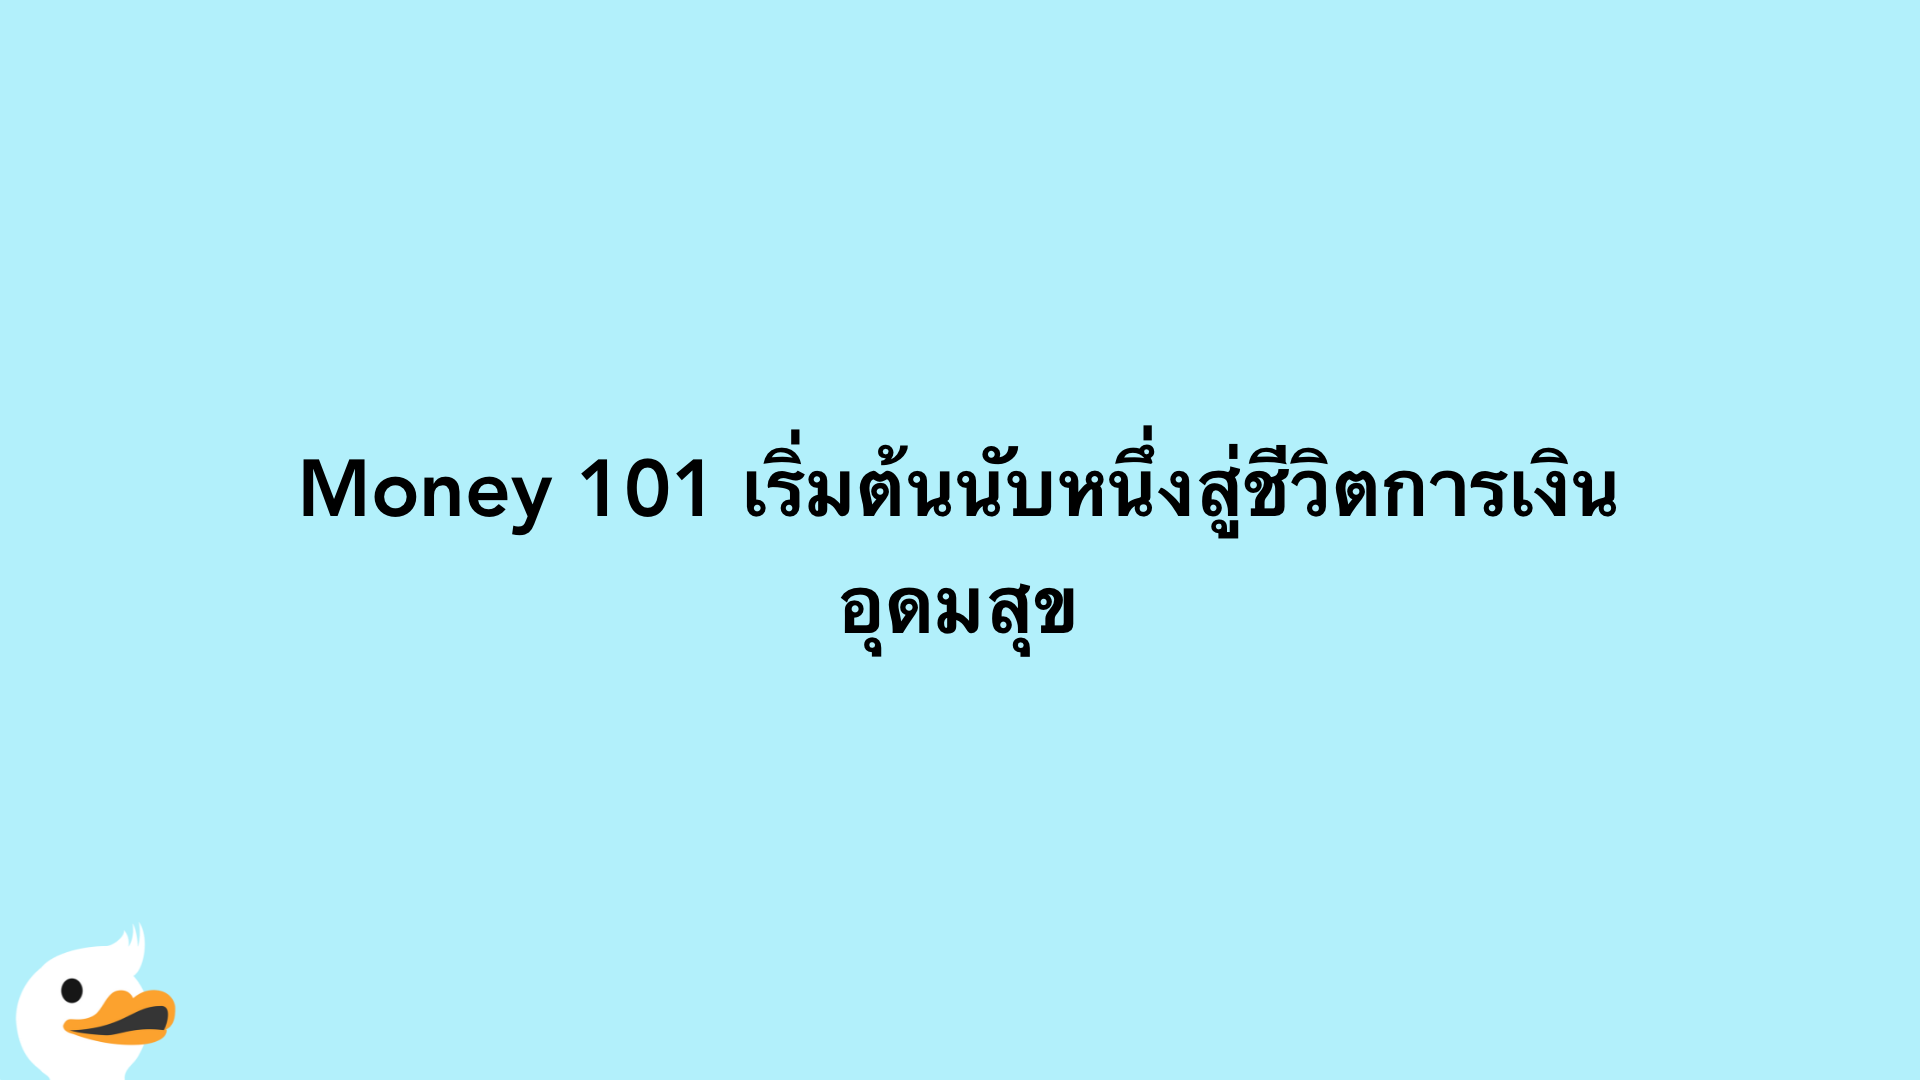 Money 101 เริ่มต้นนับหนึ่งสู่ชีวิตการเงินอุดมสุข